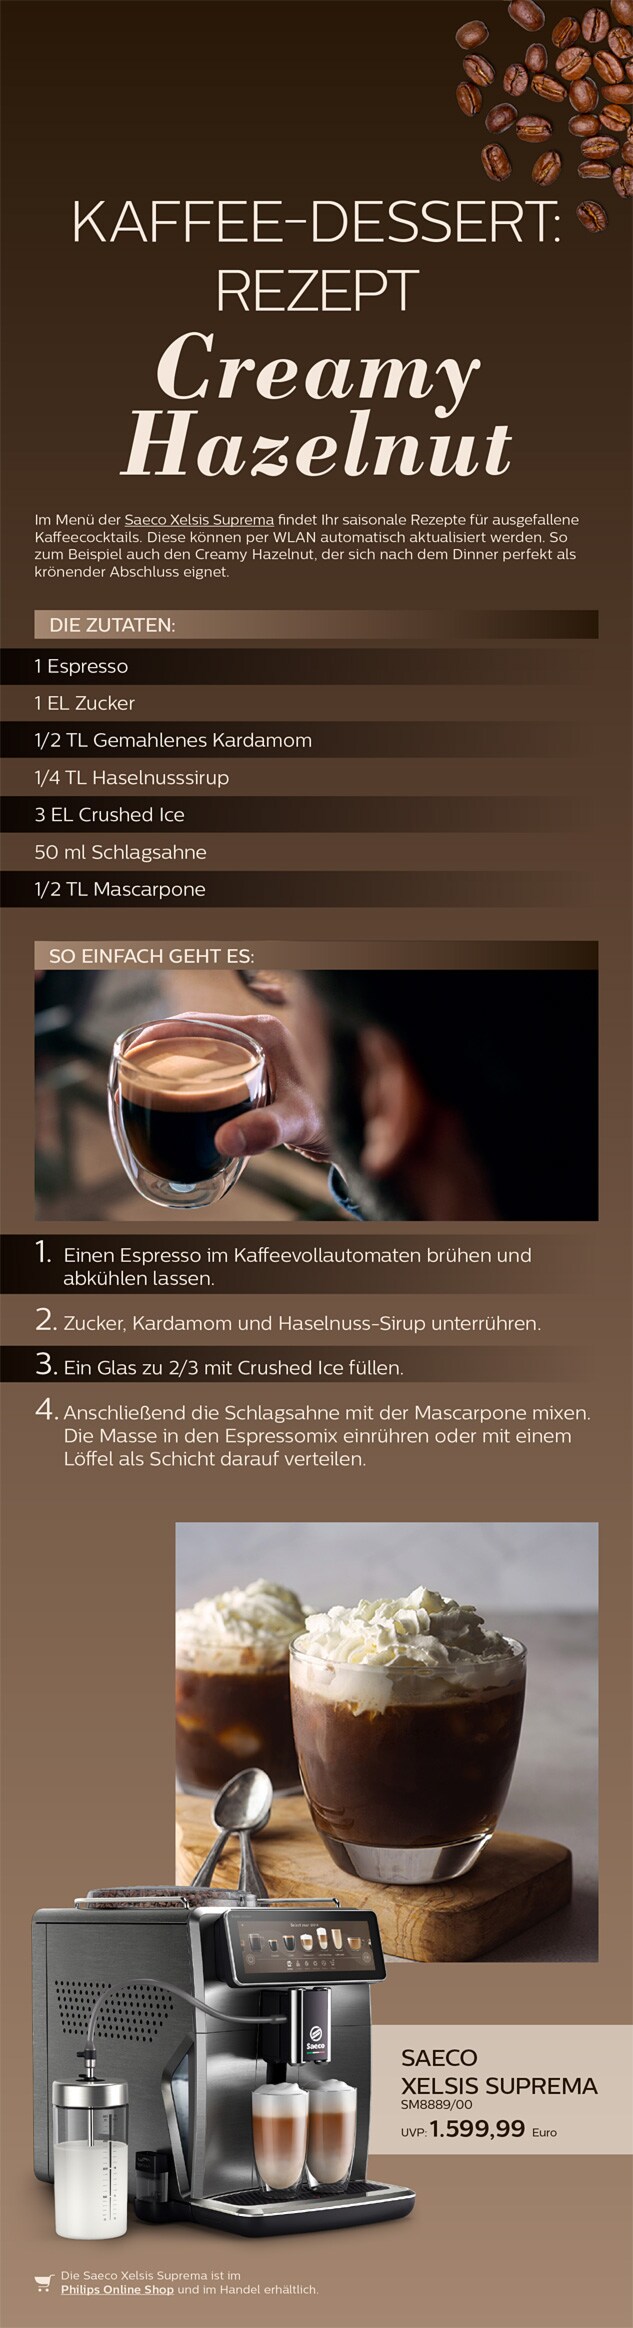 Philips Themensheet Saeco Xelsis Suprema: Rezept „Creamy Hazelnut“ download pdf